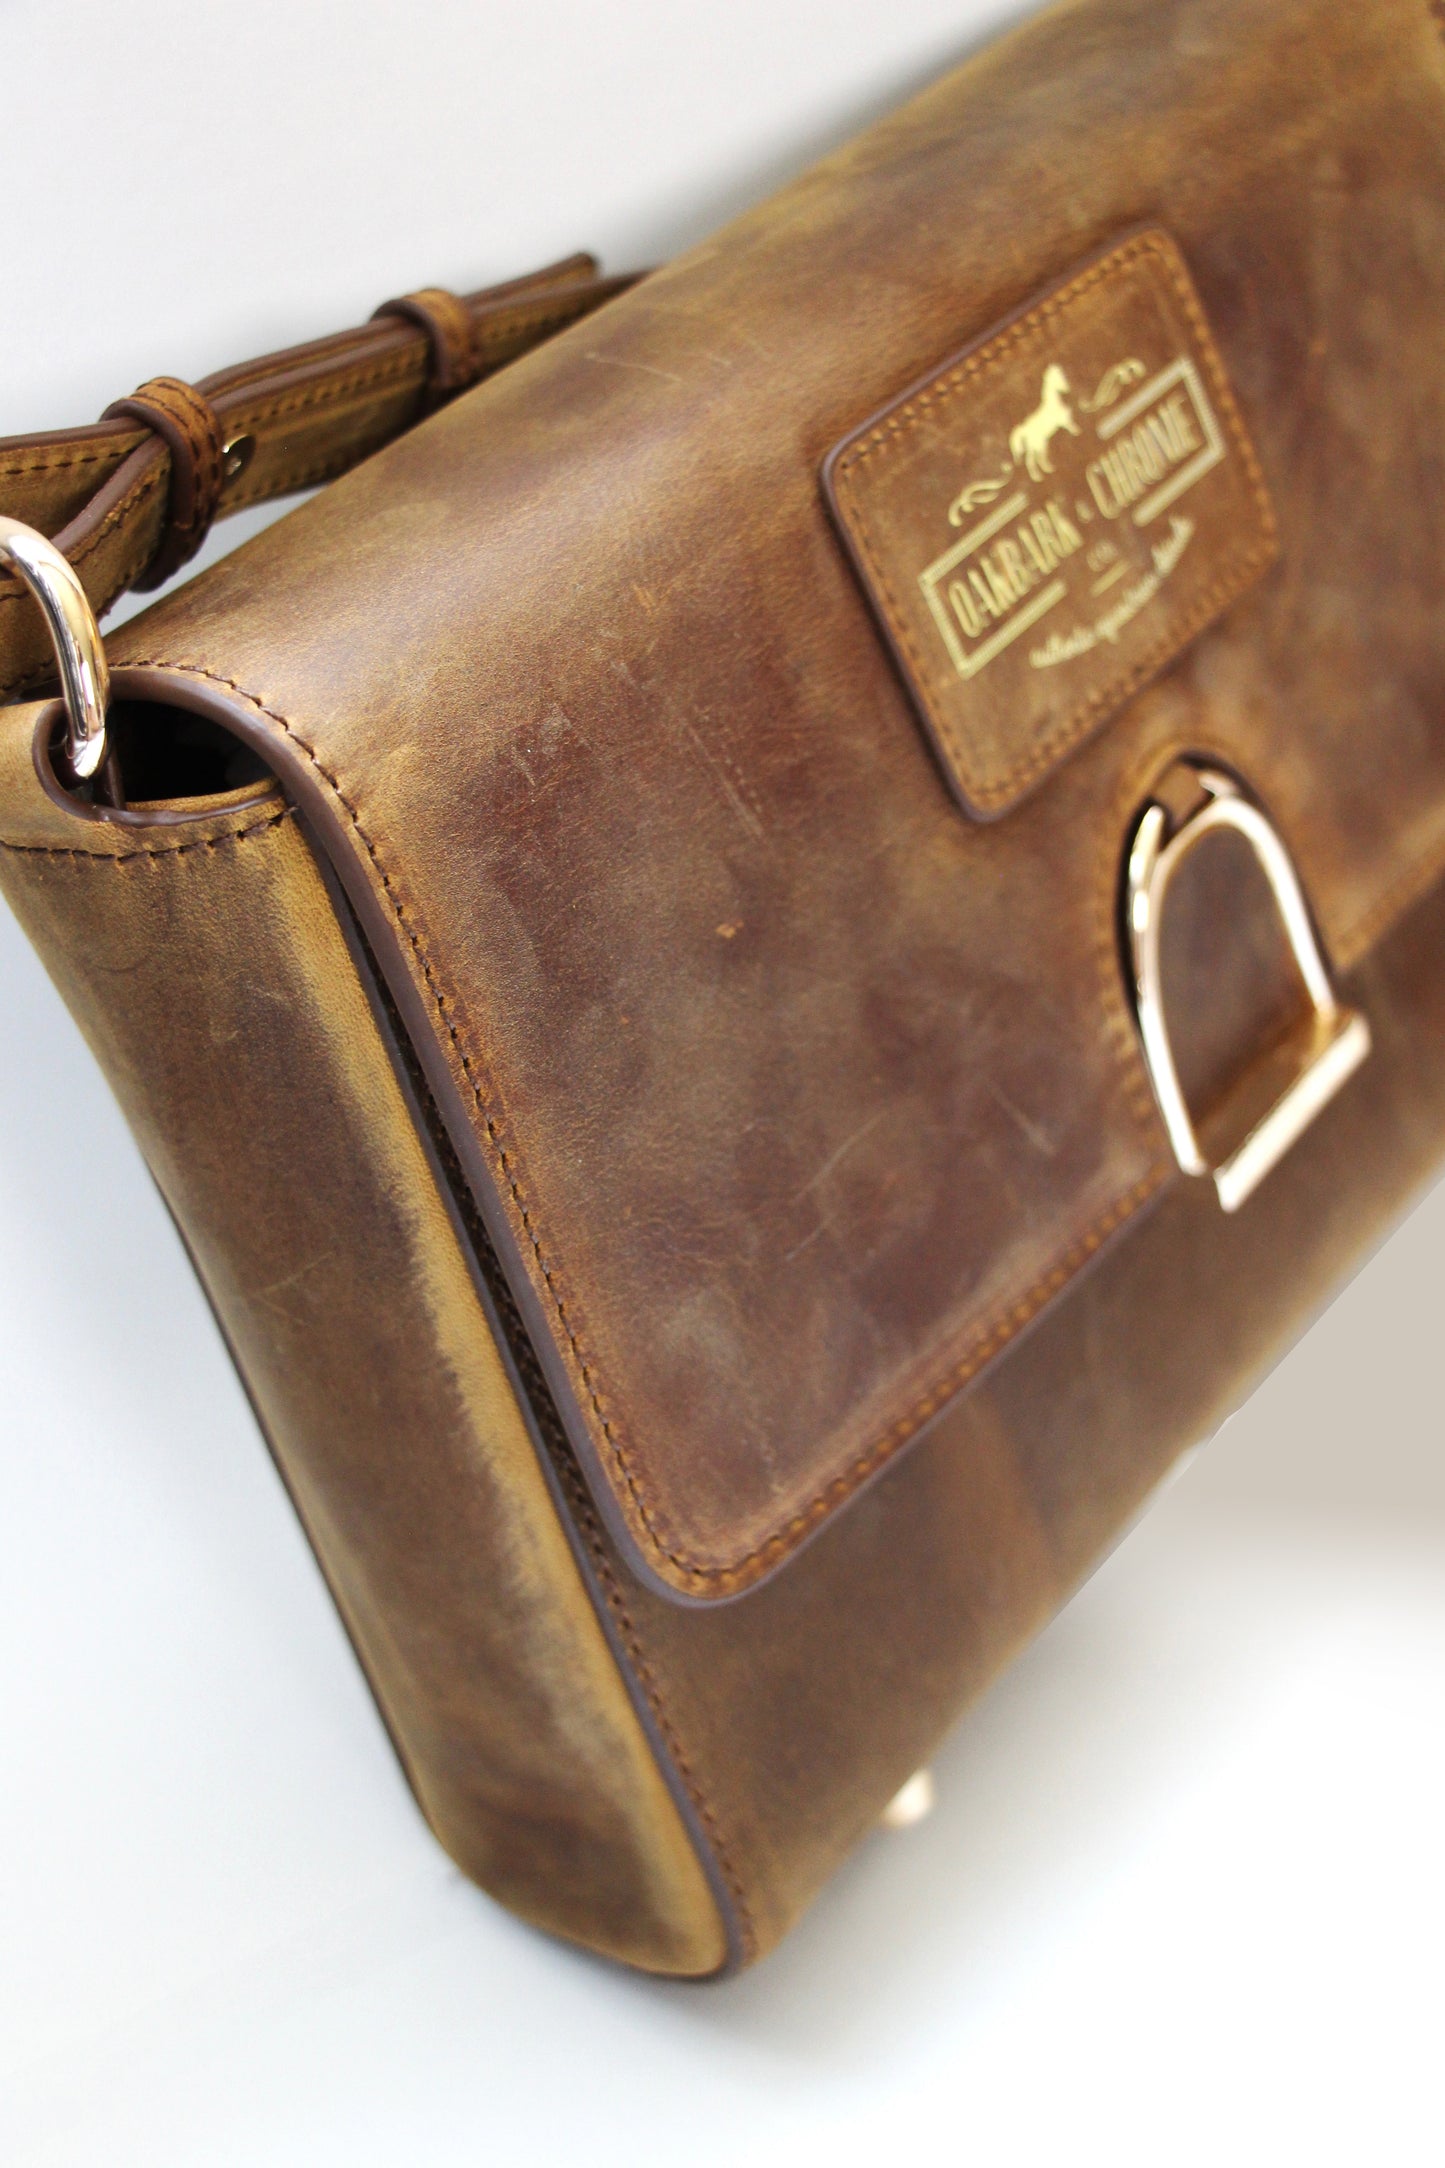 Oakbark & Chrome Limited Edition Shoulder Bag in Barnyard